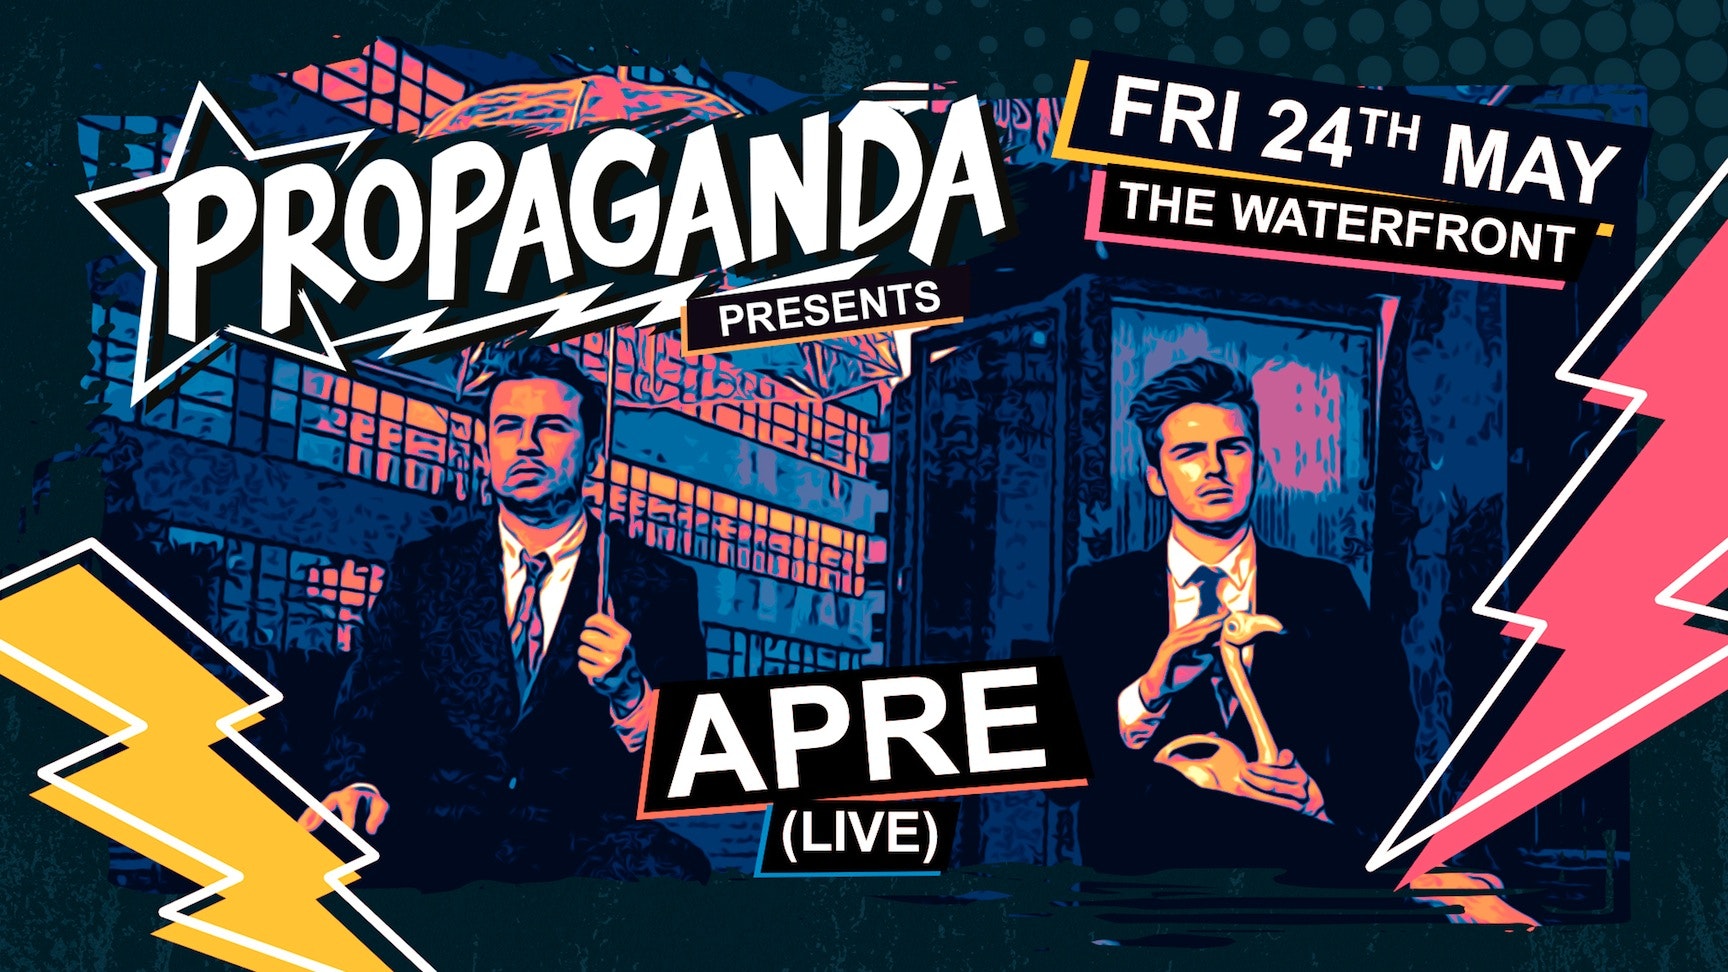 Propaganda Norwich presents APRE (live) & Sunday Sessions Giveaway!